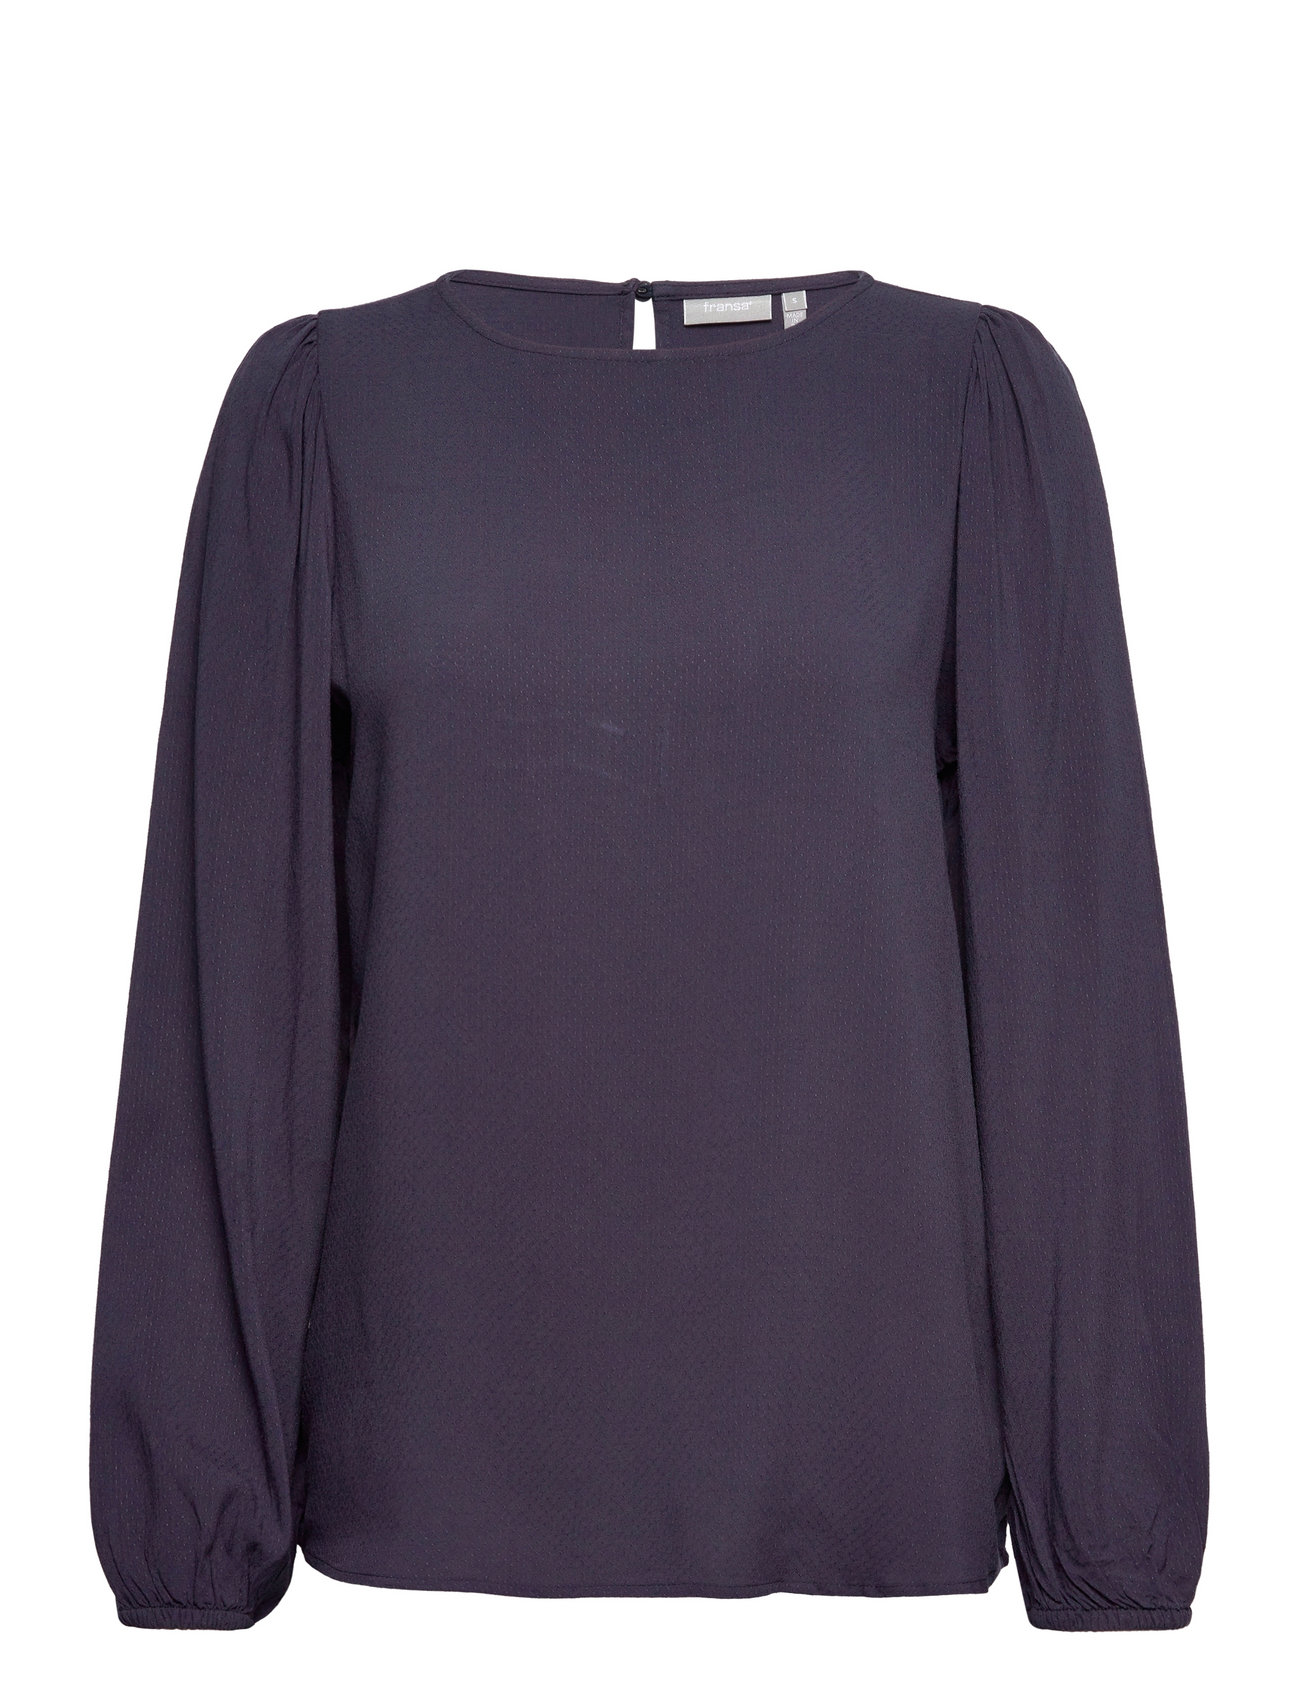 Fransa Frey Bl 1 – blusar & skjortor – shoppa på Booztlet